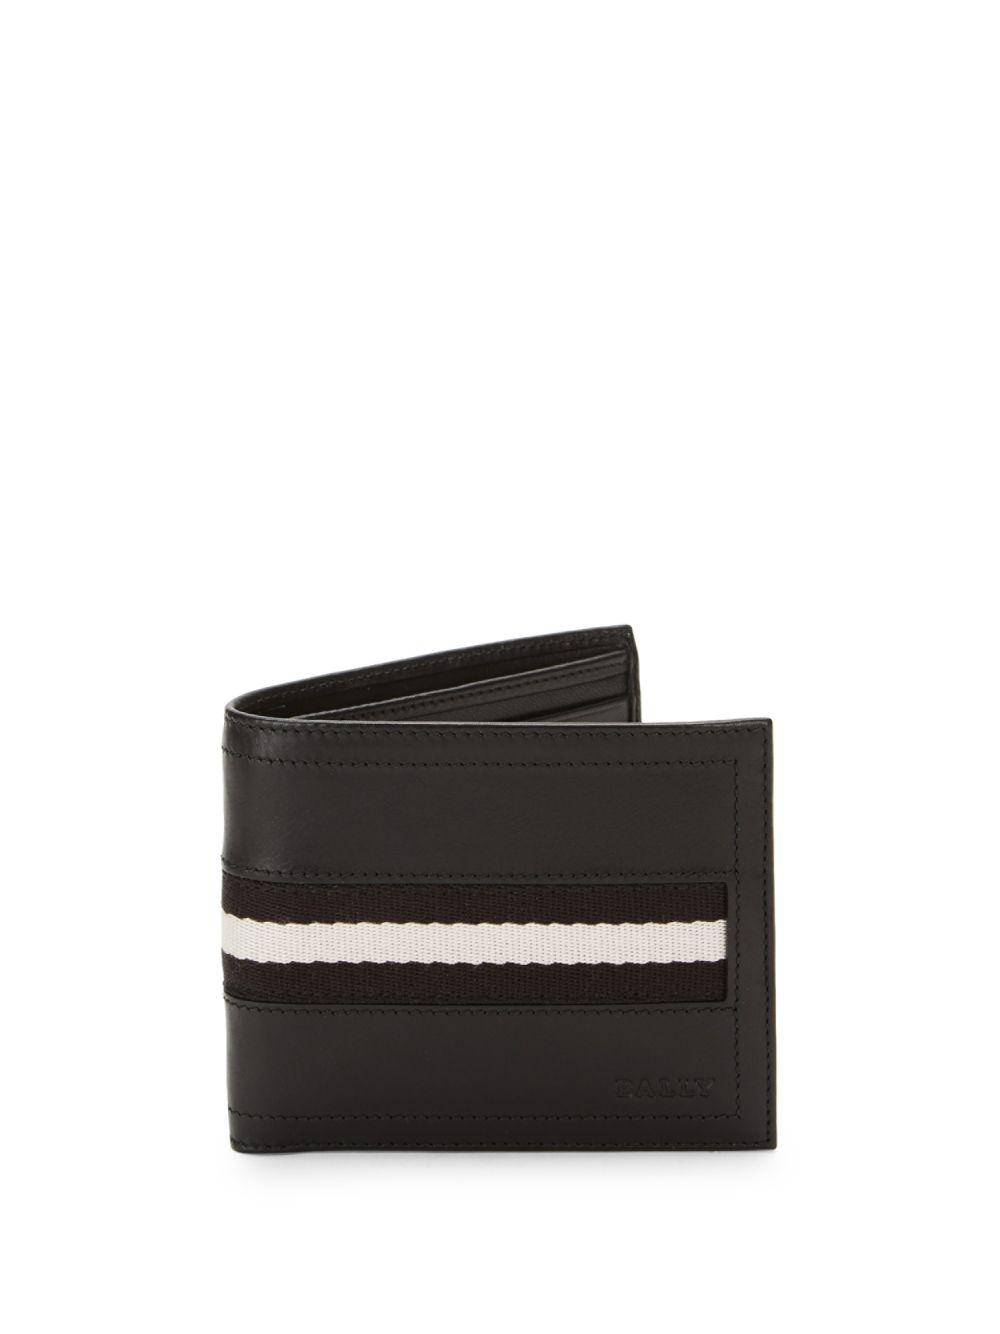 Bally Tollen Striped Leather Wallet in Black for Men - Lyst